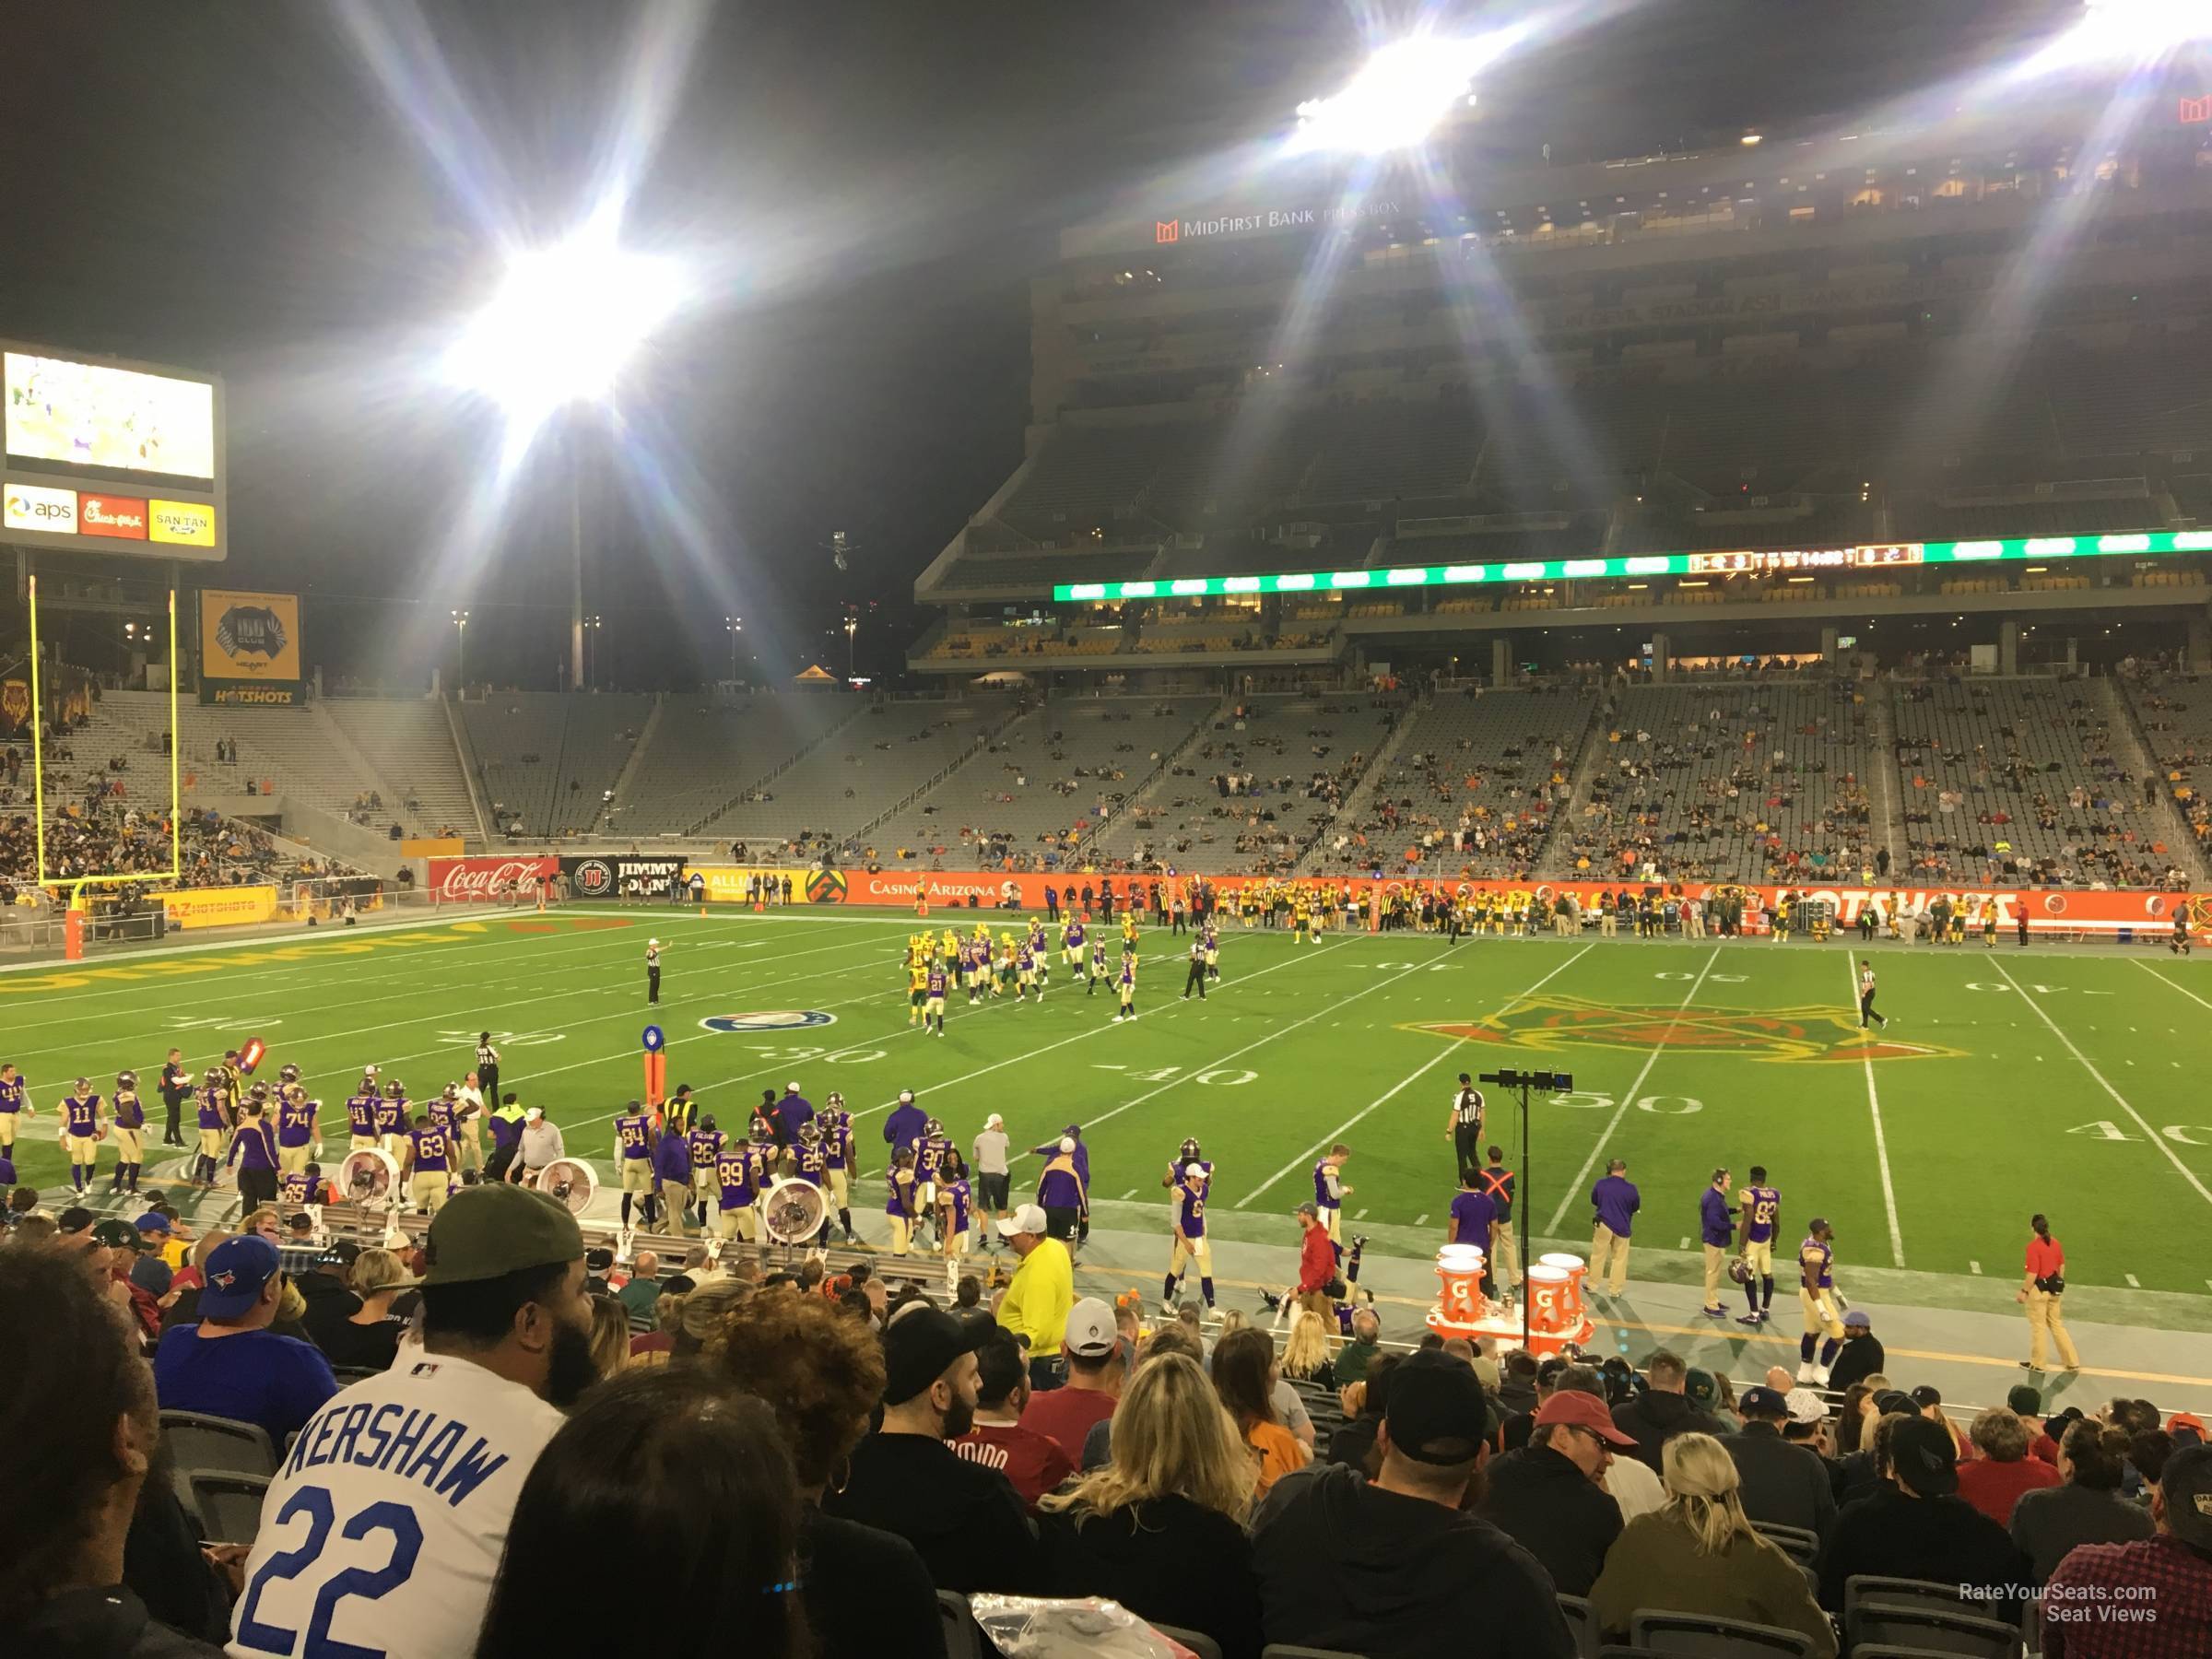 section 29, row 17 seat view  - sun devil stadium